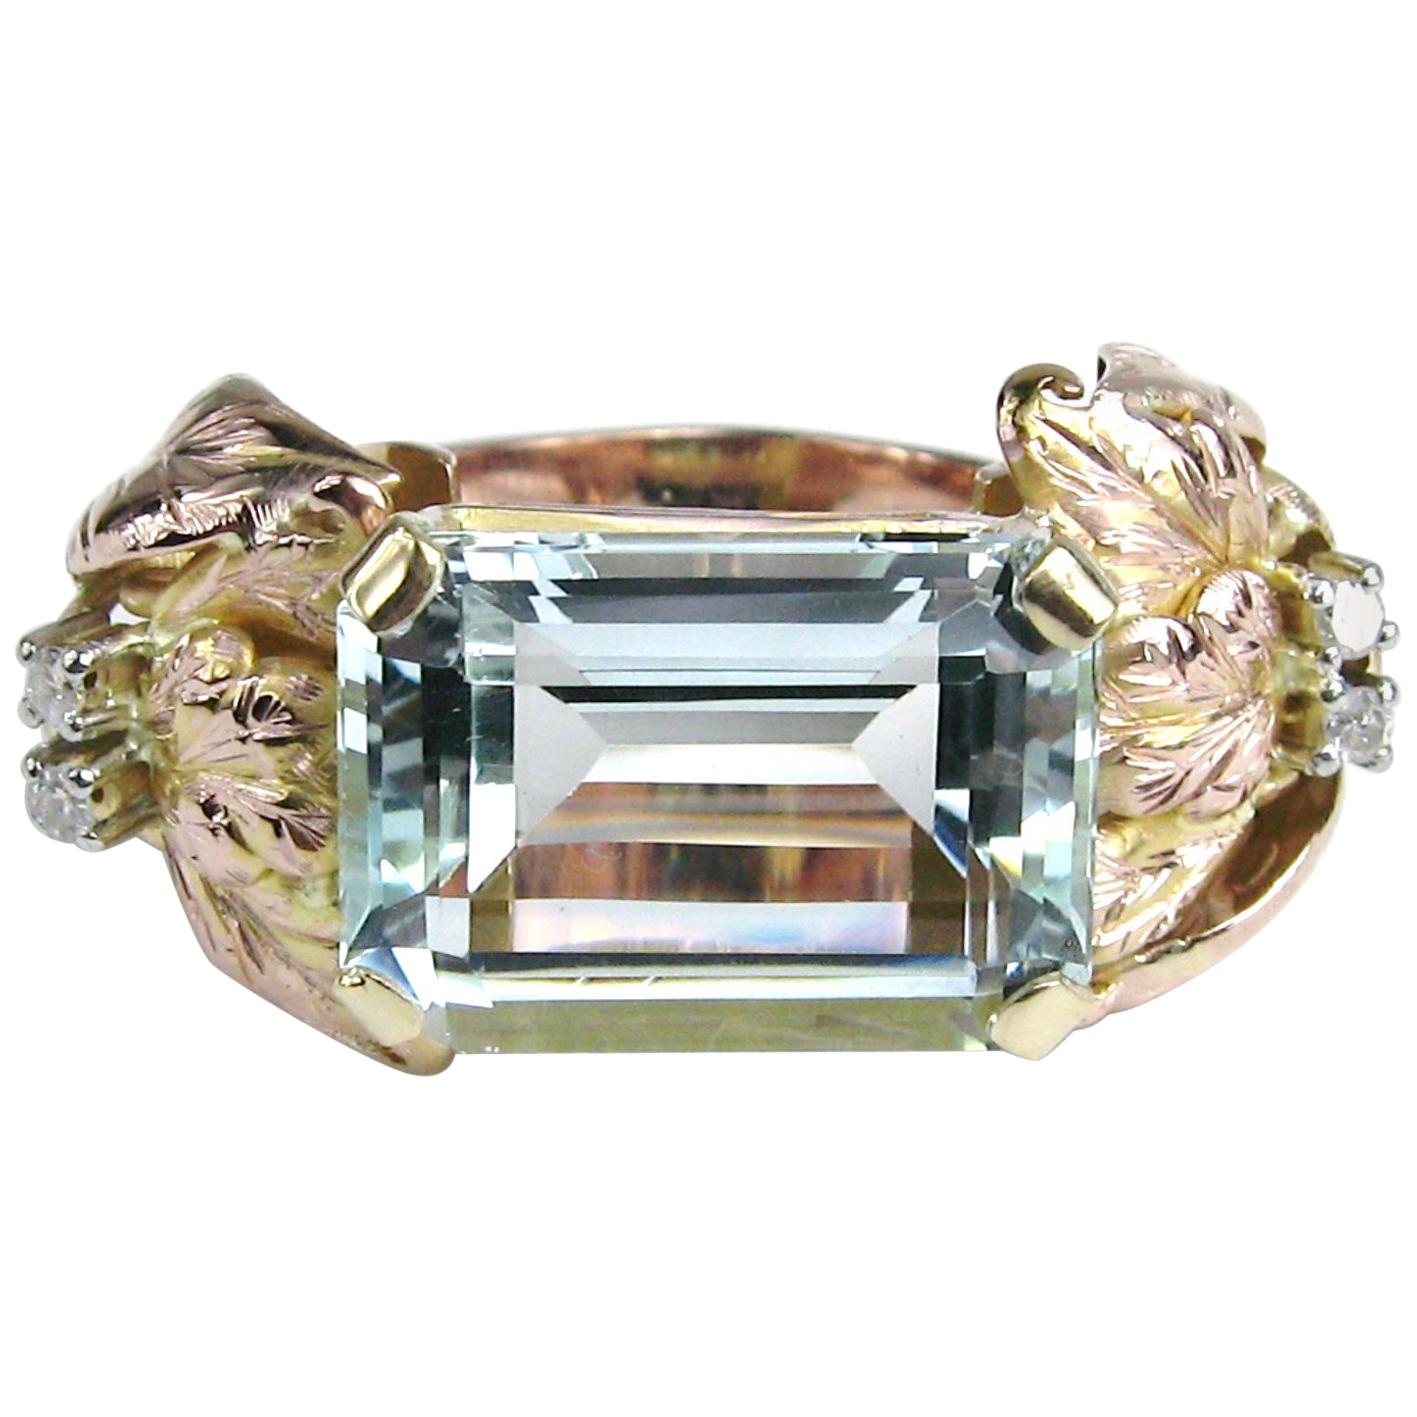 14 Karat Gold 13.75 Carat Emerald Cut Aquamarine Diamond Cocktail Ring For Sale